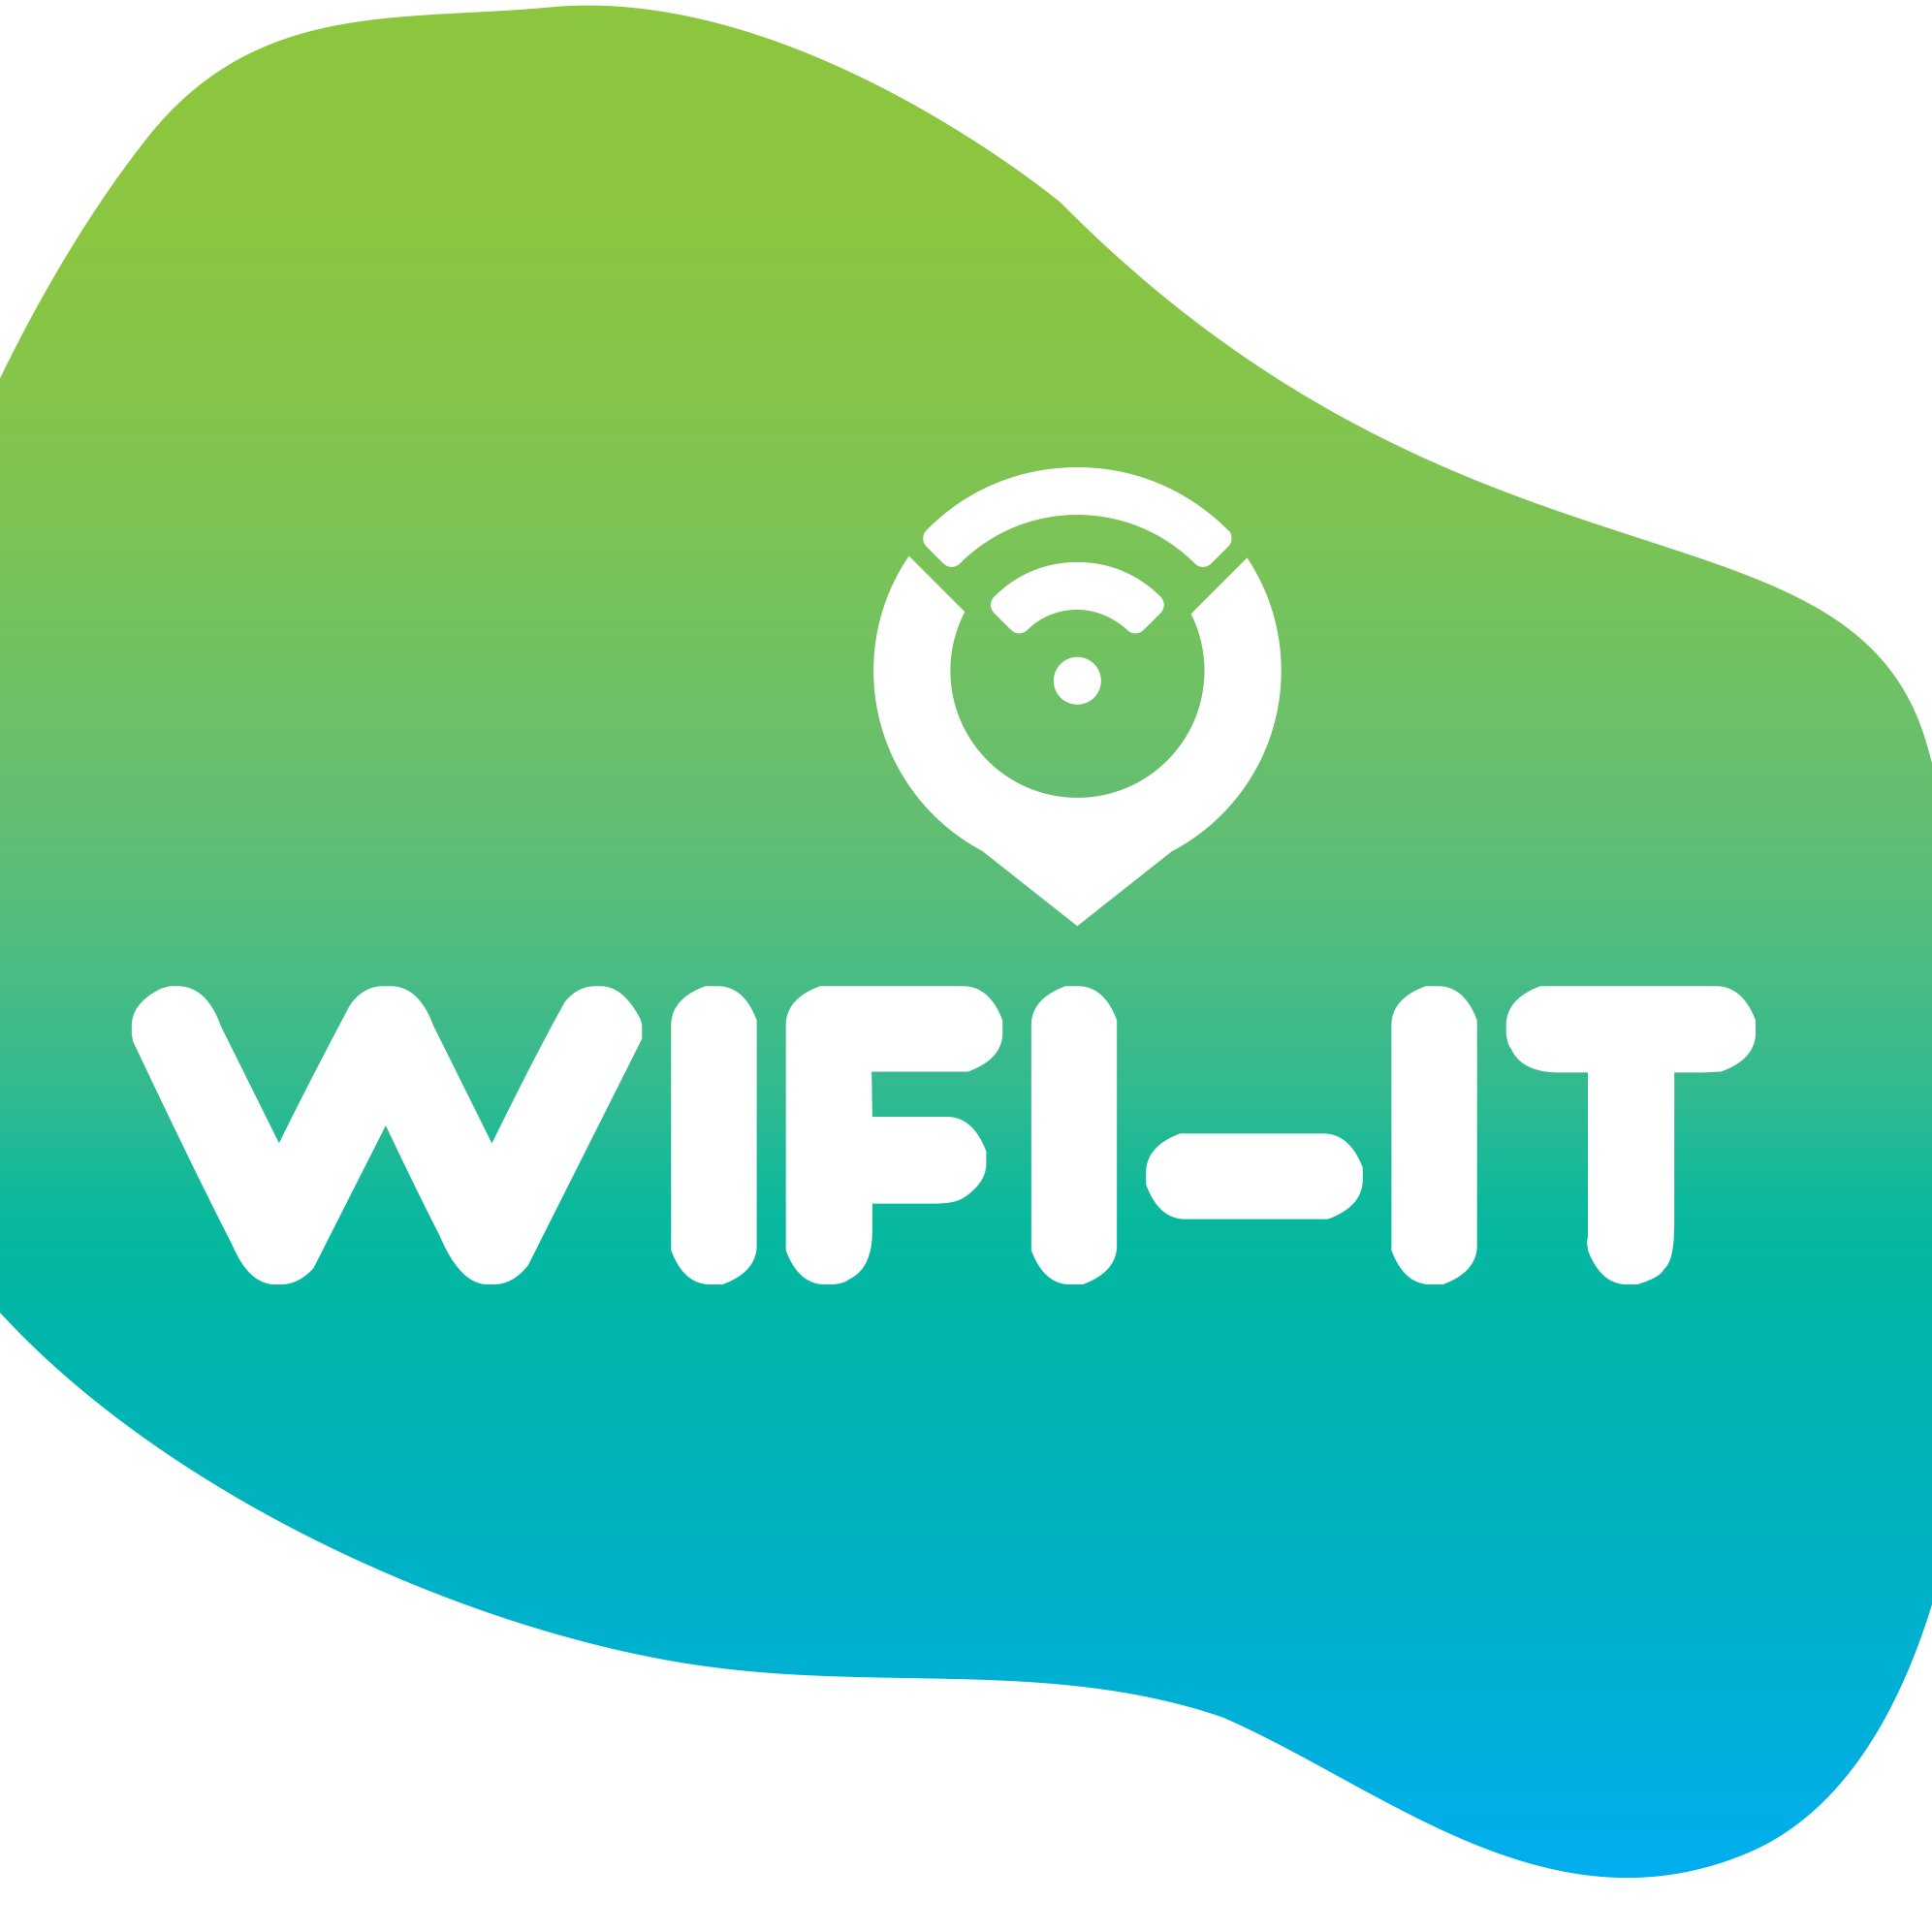 WiFi-It Events